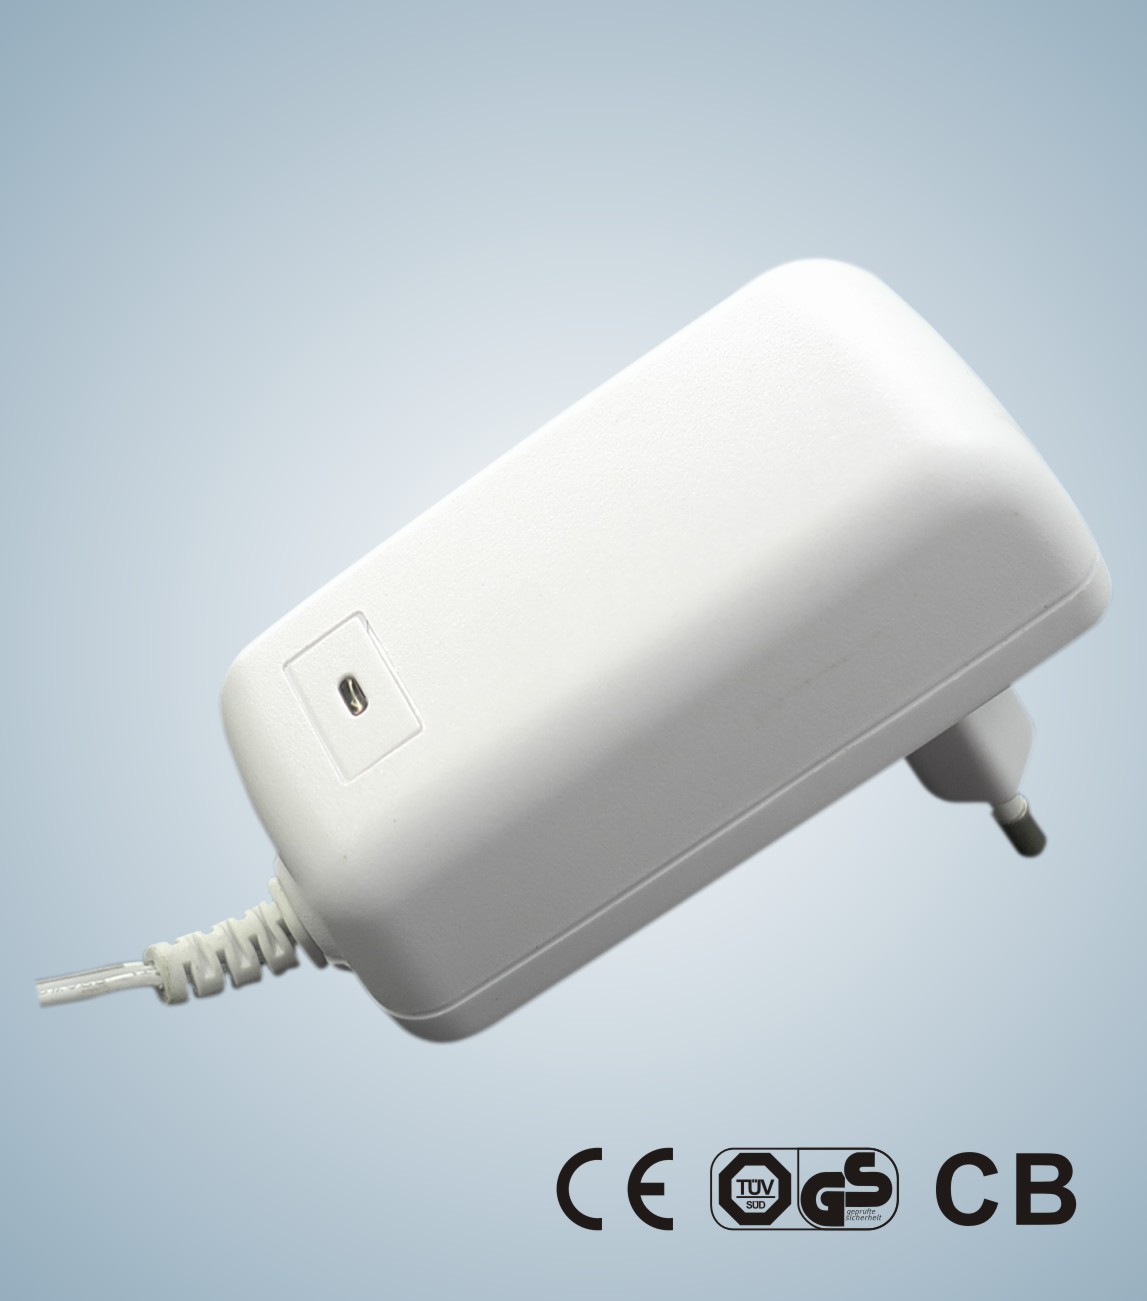 20W KSAP020xxxyyyyHEC Switching Power Adapter dengan 12VDC 0.1-2A CB, CE, GS keselamatan persetujuan untuk penggunaan umum I.T.E